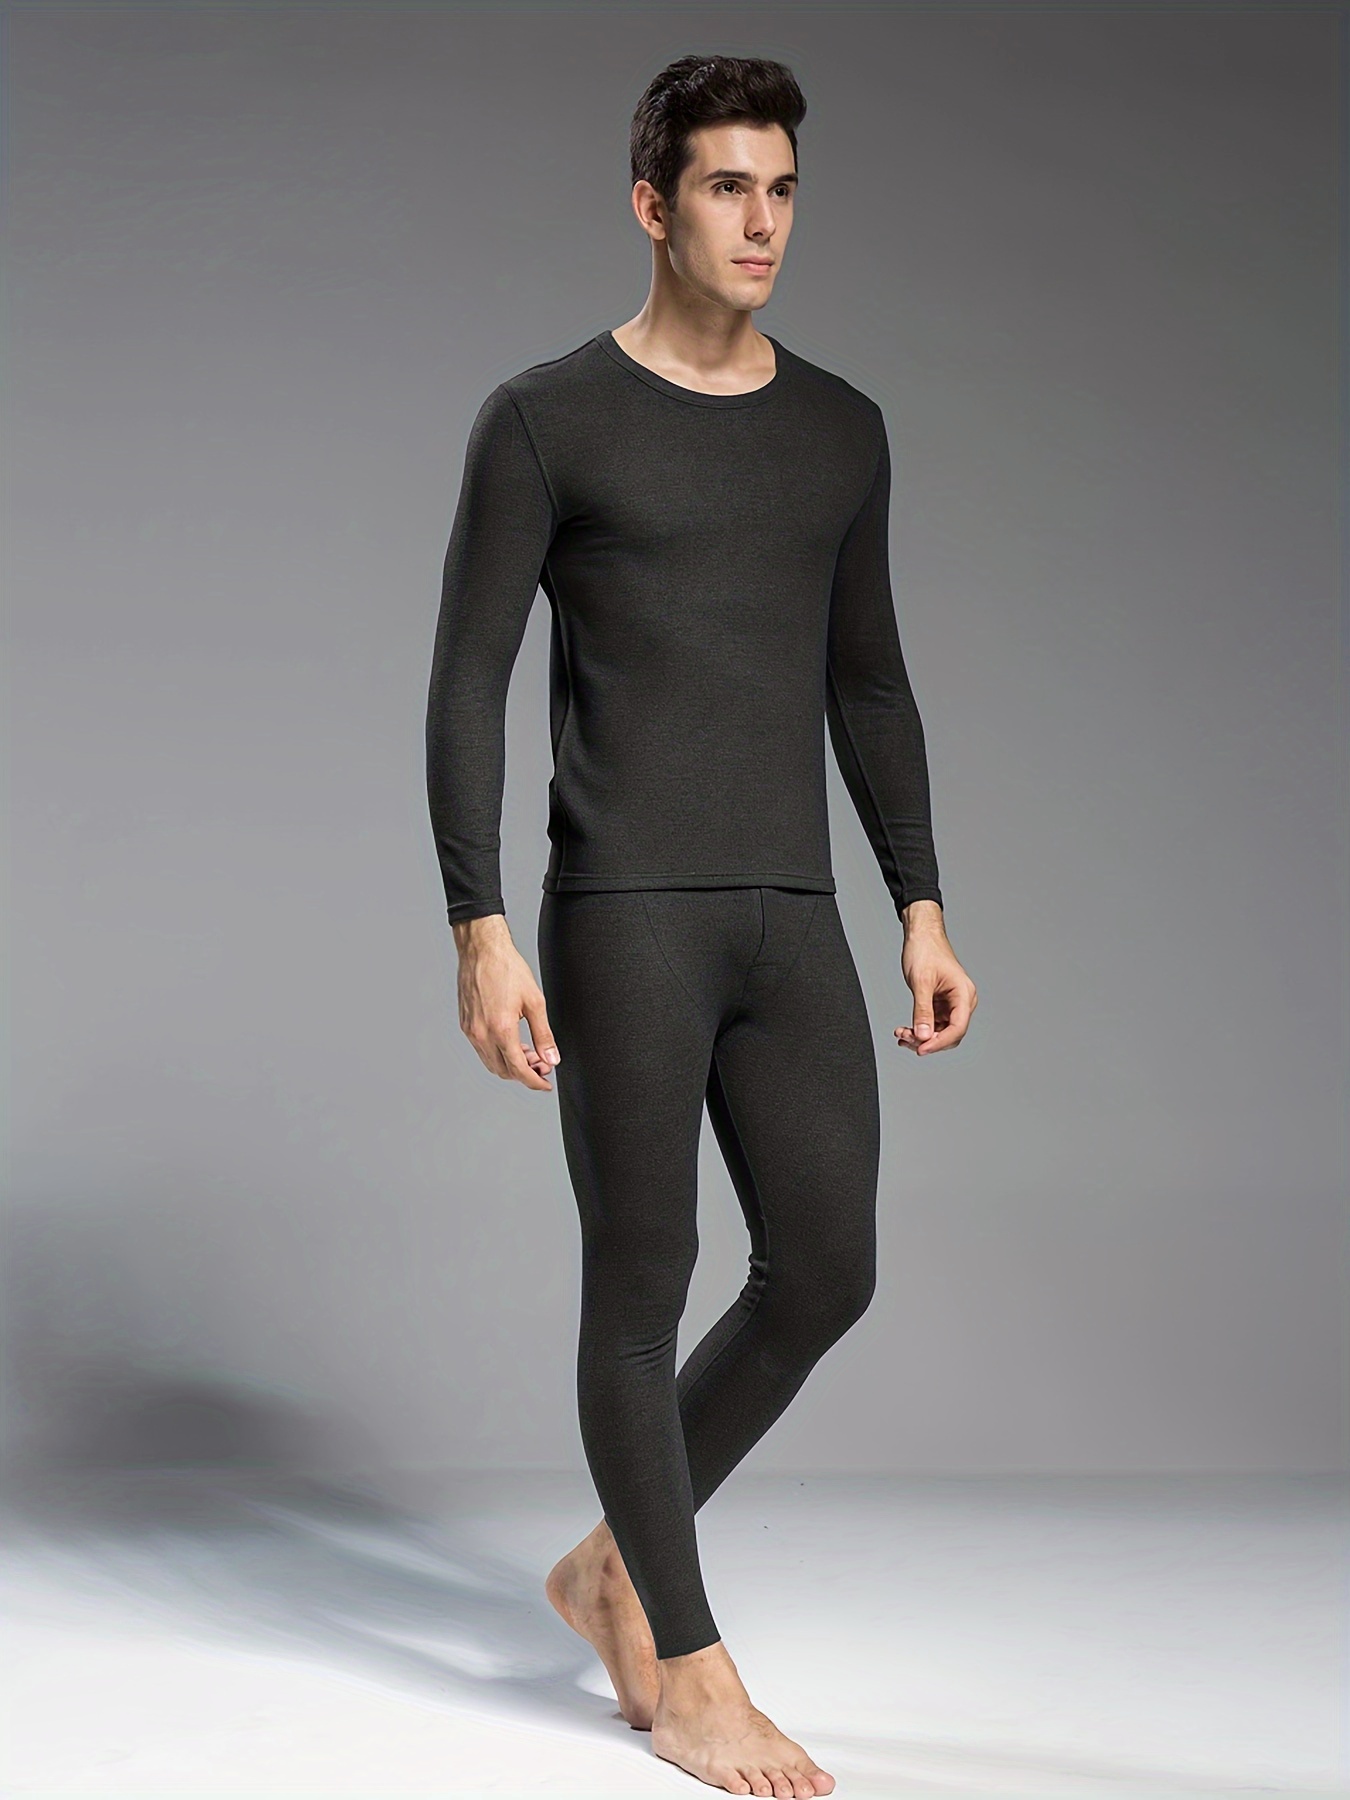 Cheap Thermal Underwear Sets For Men Winter Thermo Underwear